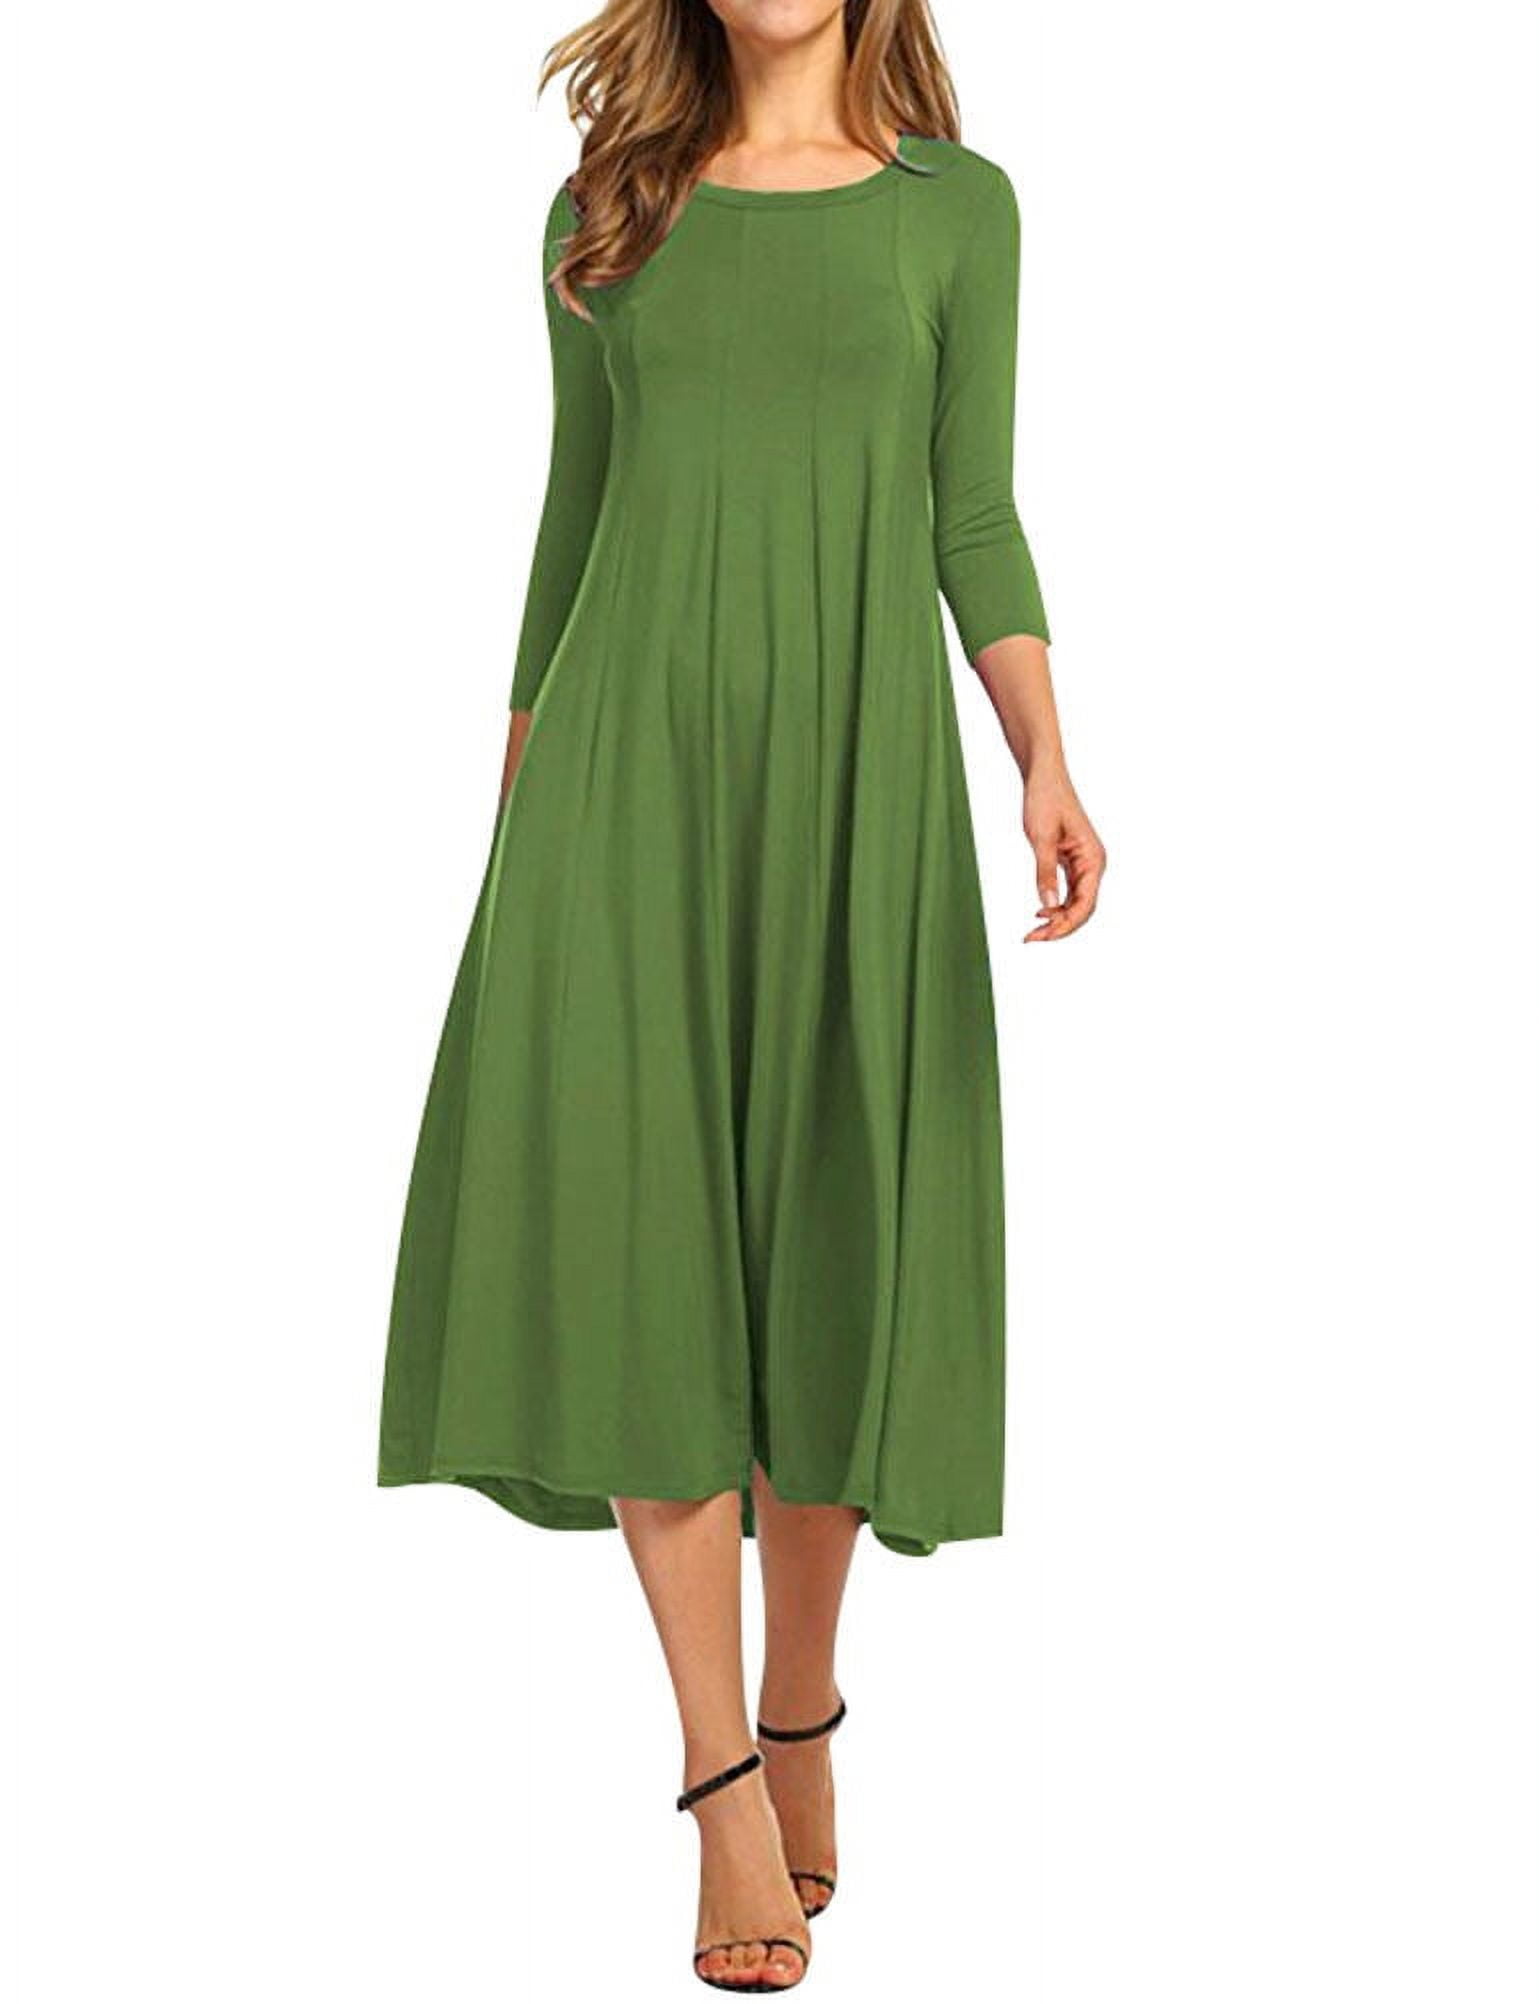 Nlife Women 3/4 Sleeve Round Neck Swing Midi Dress - Walmart.com